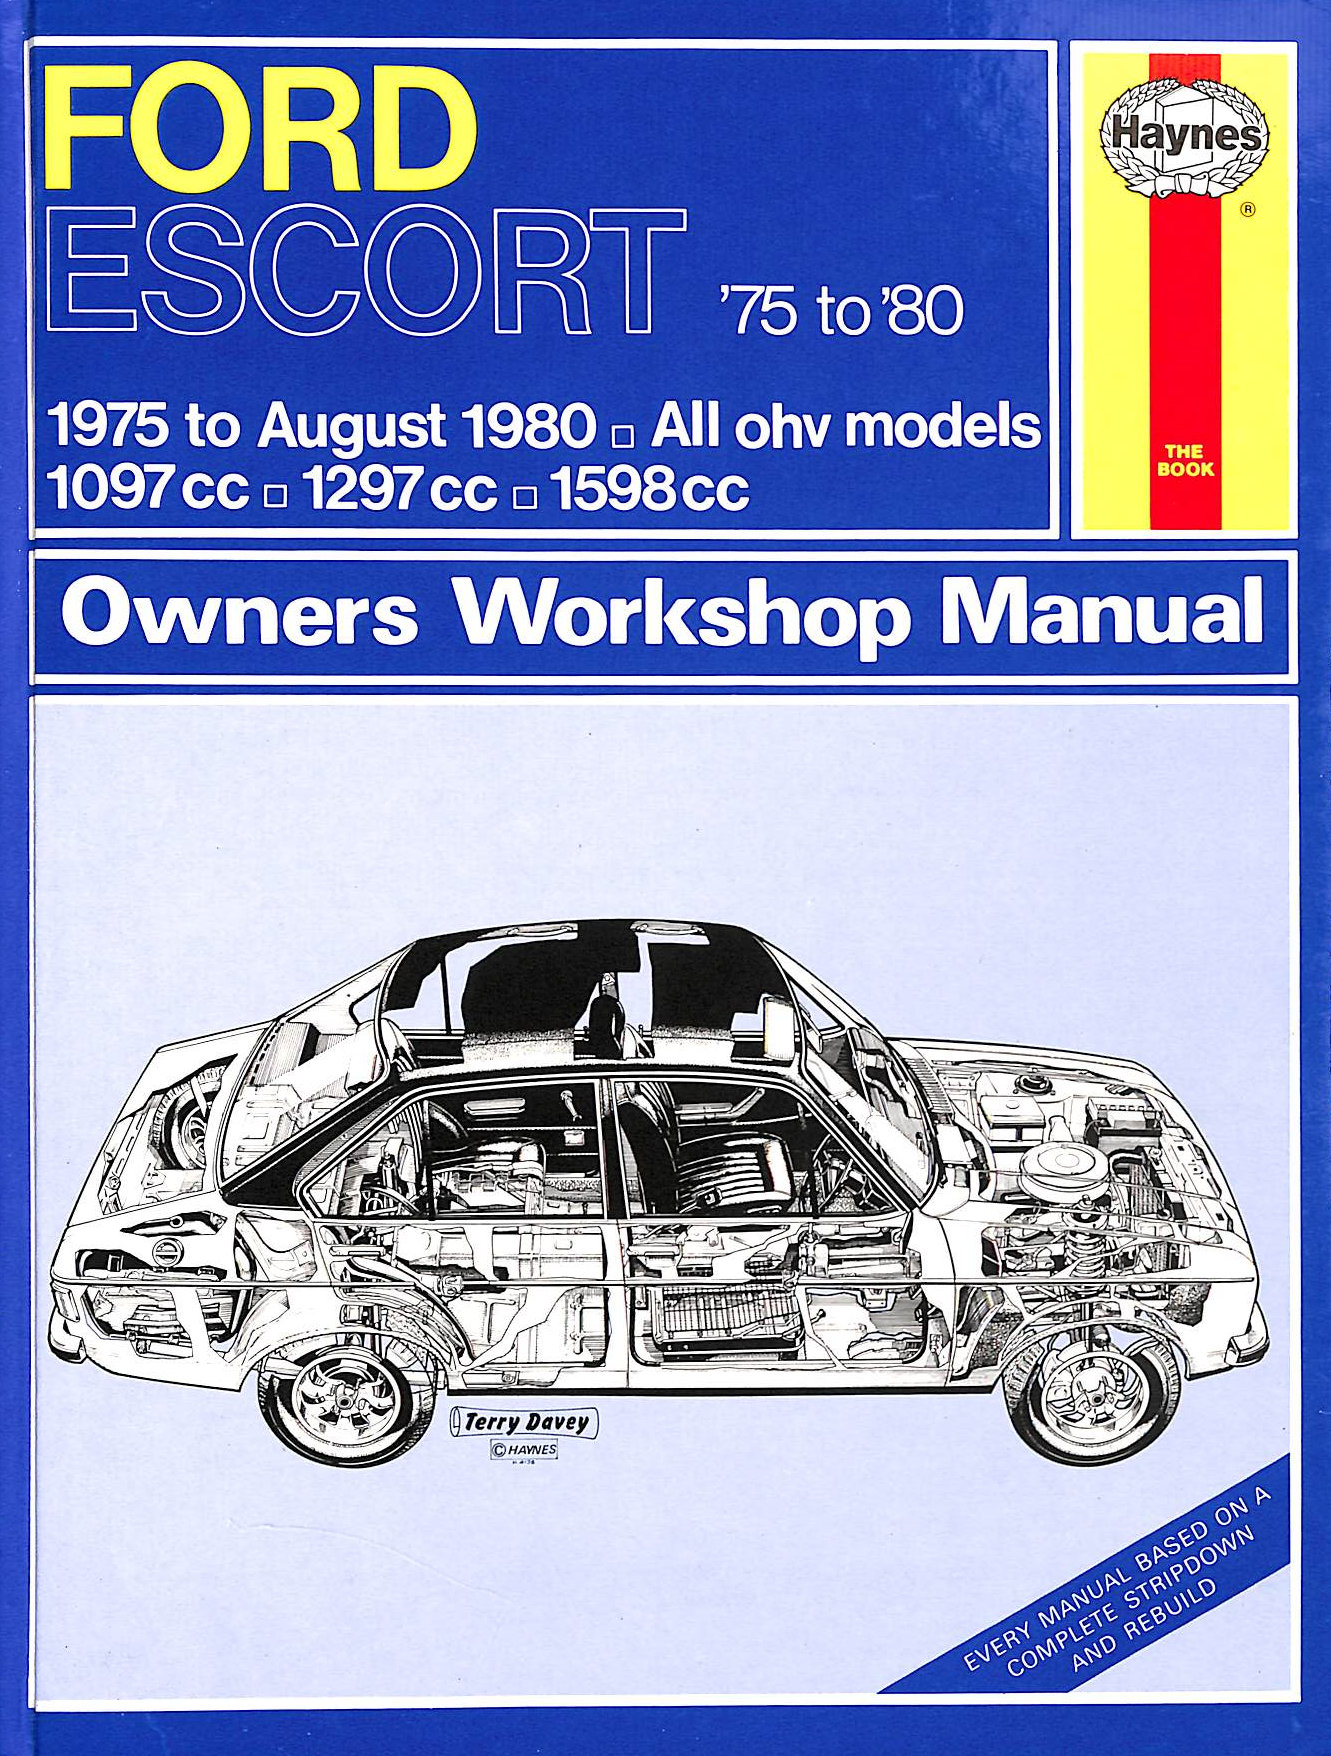 ANON - Ford Escort (7Ford Escort (1975 - Aug 1980) All ohv Models, 1097cc, 1297cc, 1598cc Haynes Repair Manual5 - Aug 80) Haynes Repair Manual: 75-80